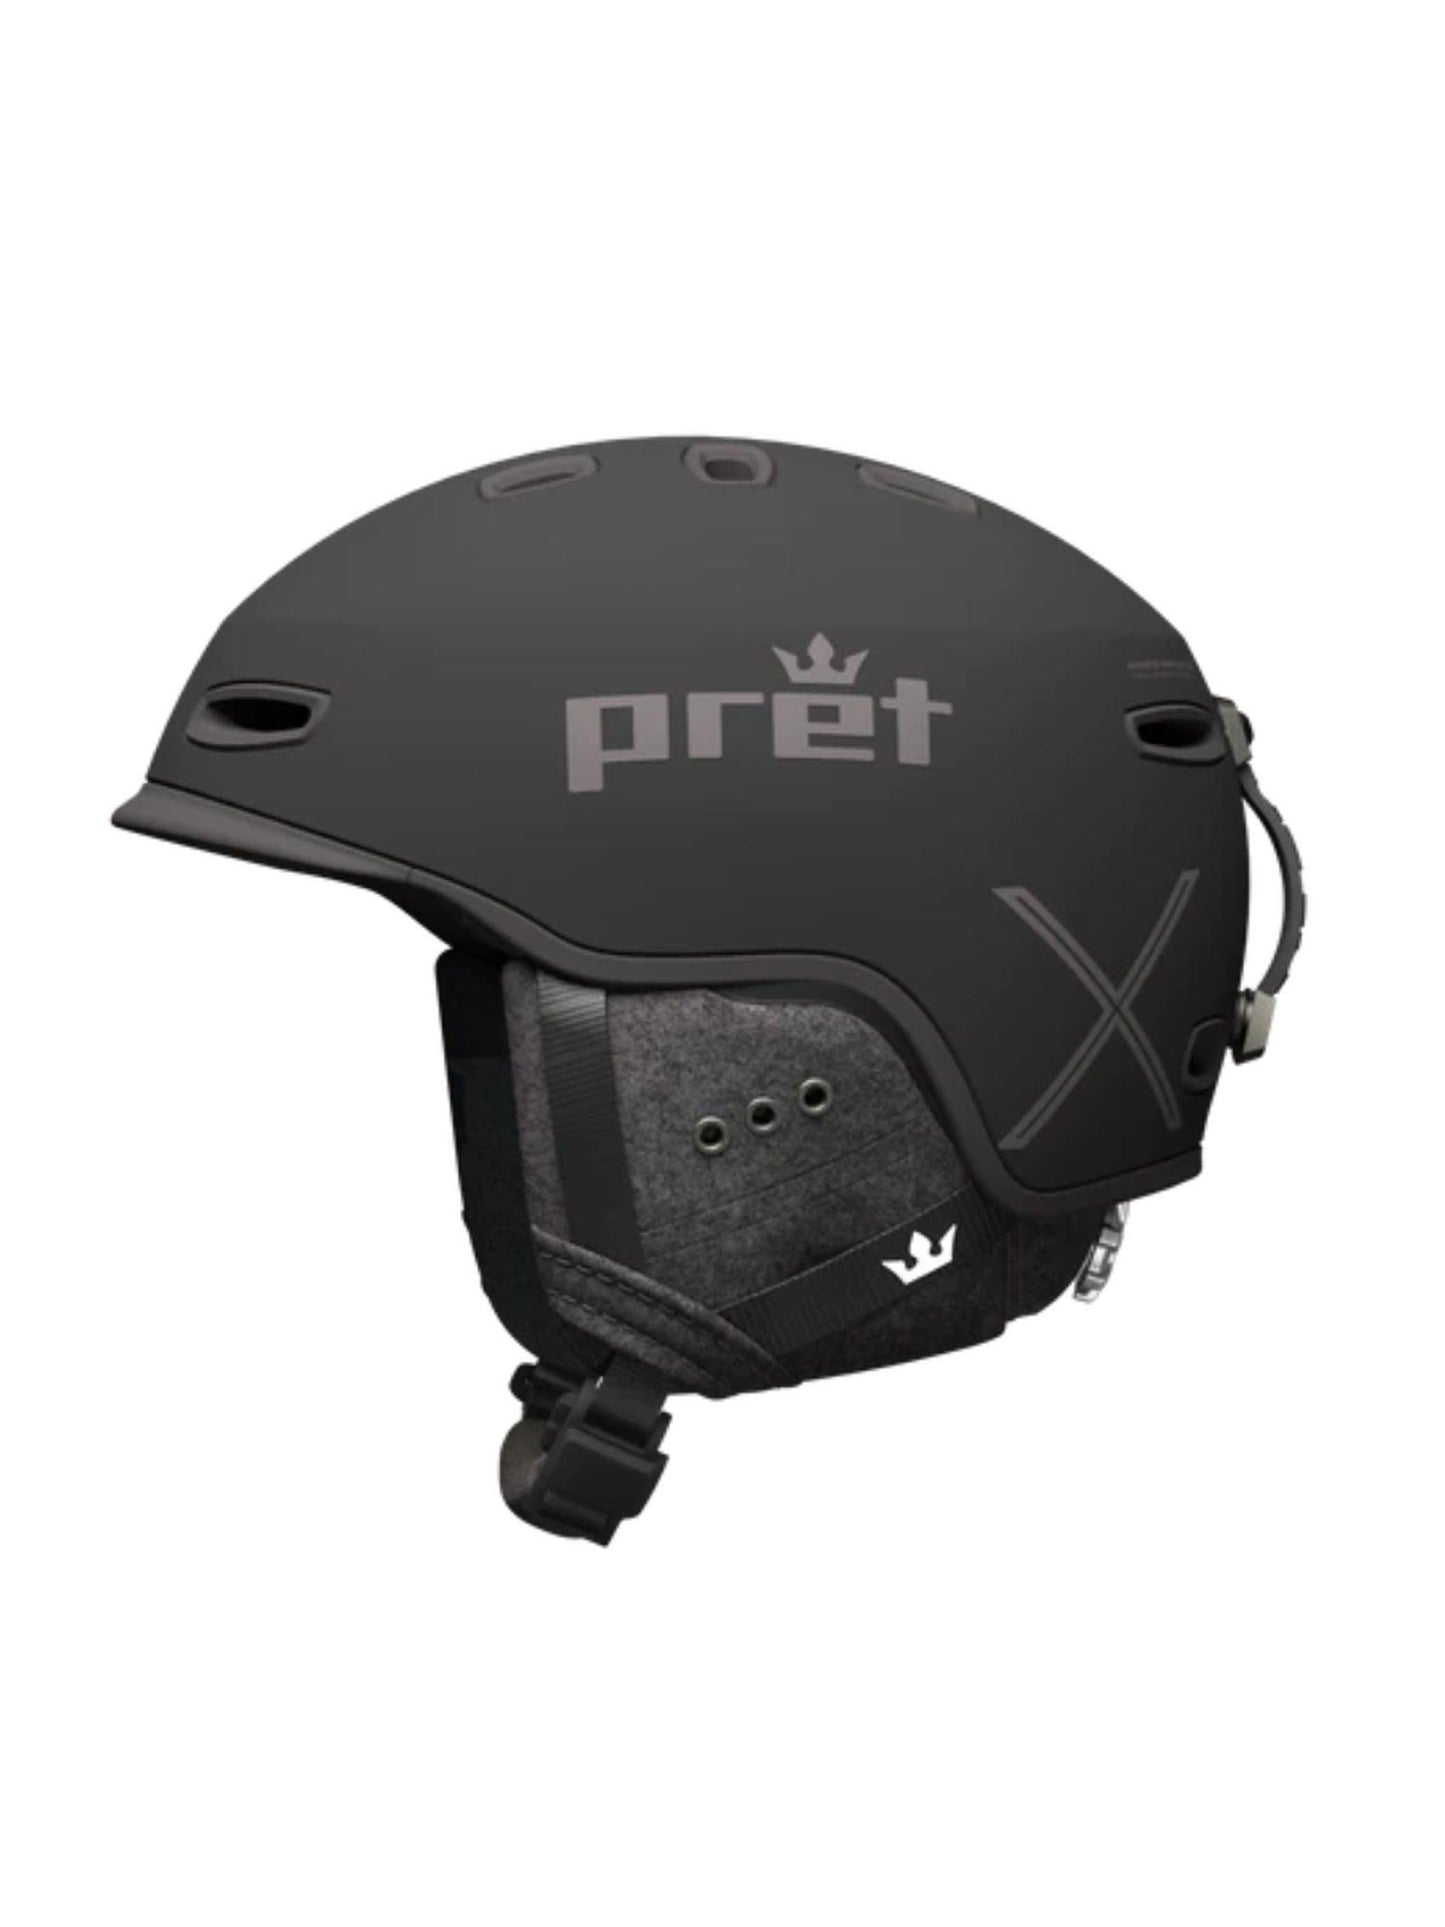 Pret Cynic X2 ski helmet, black